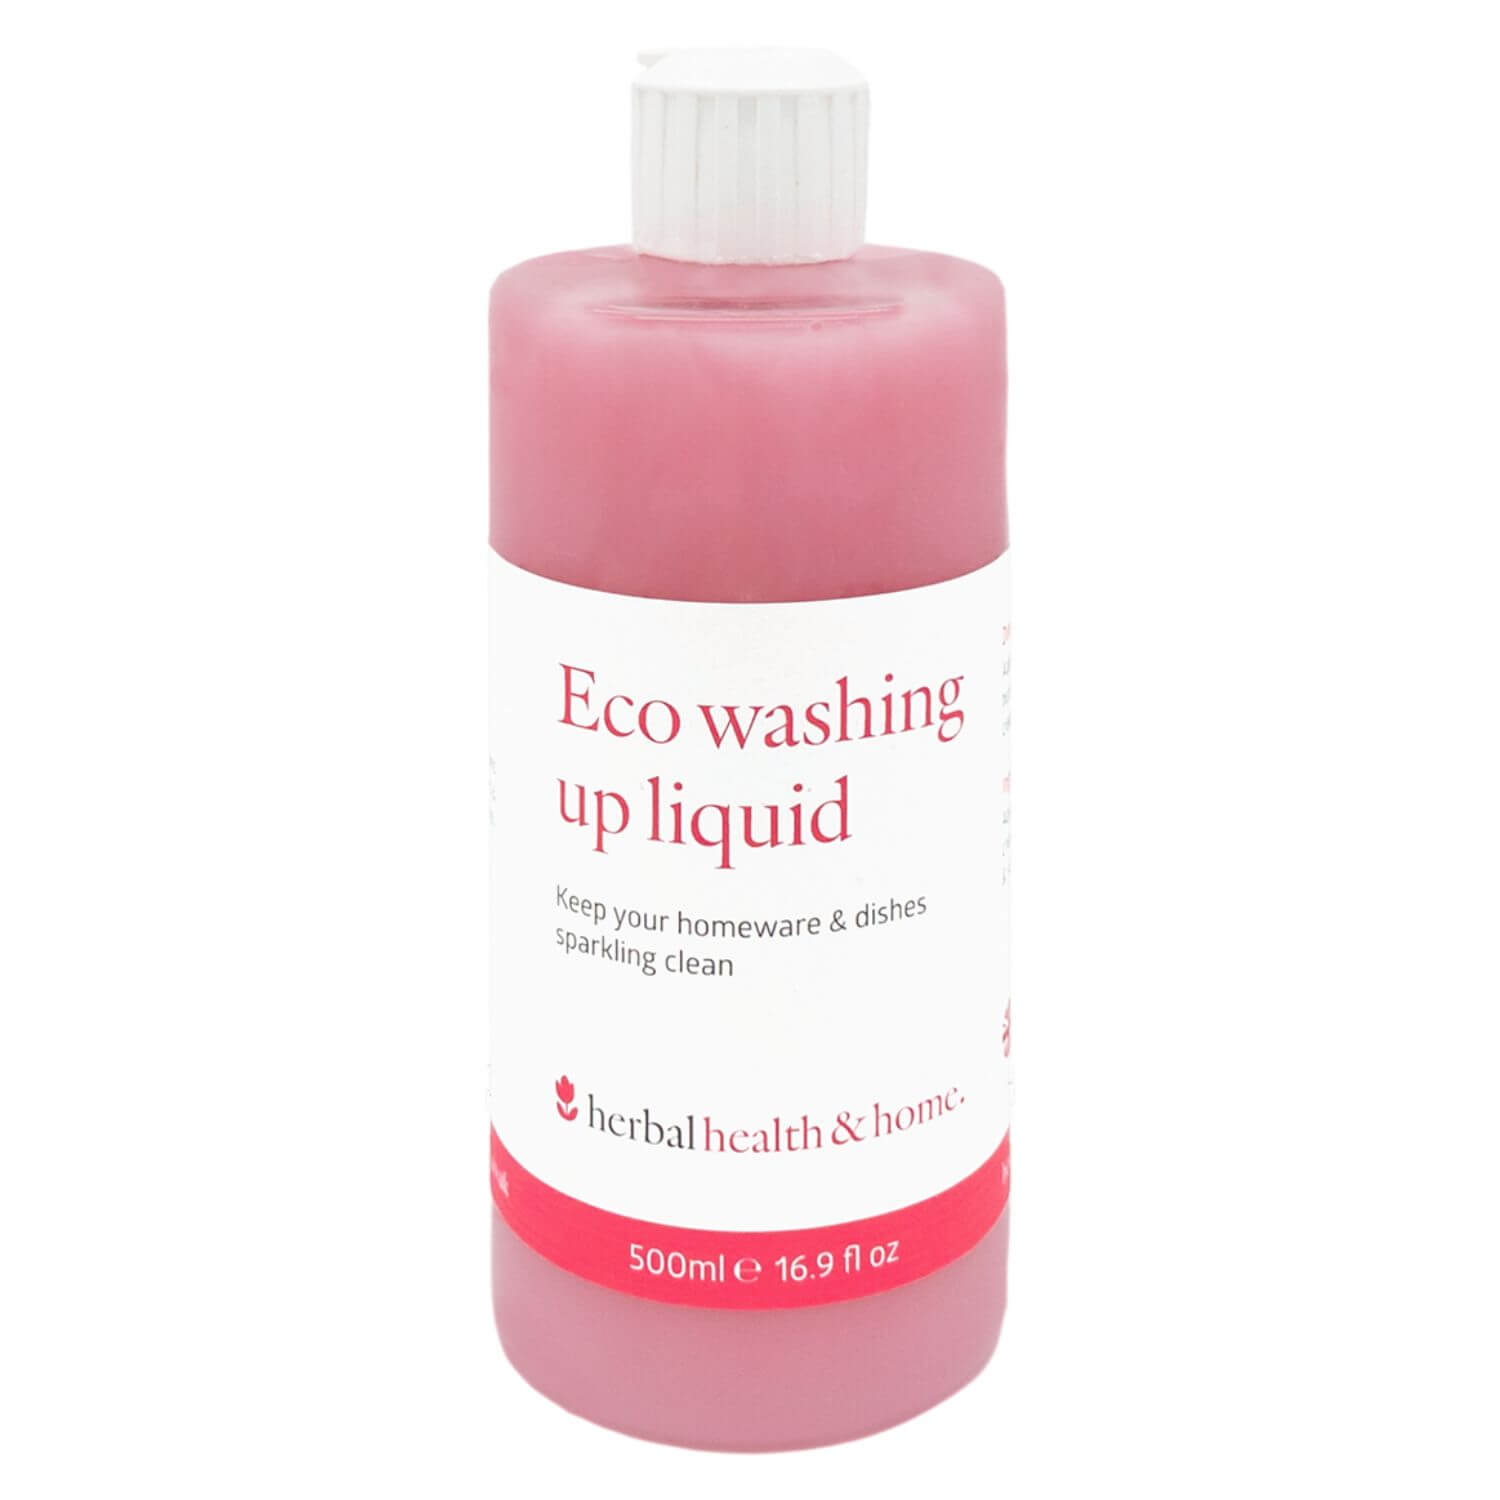 Eco Washing Up Liquid | Herbal, Health & Home